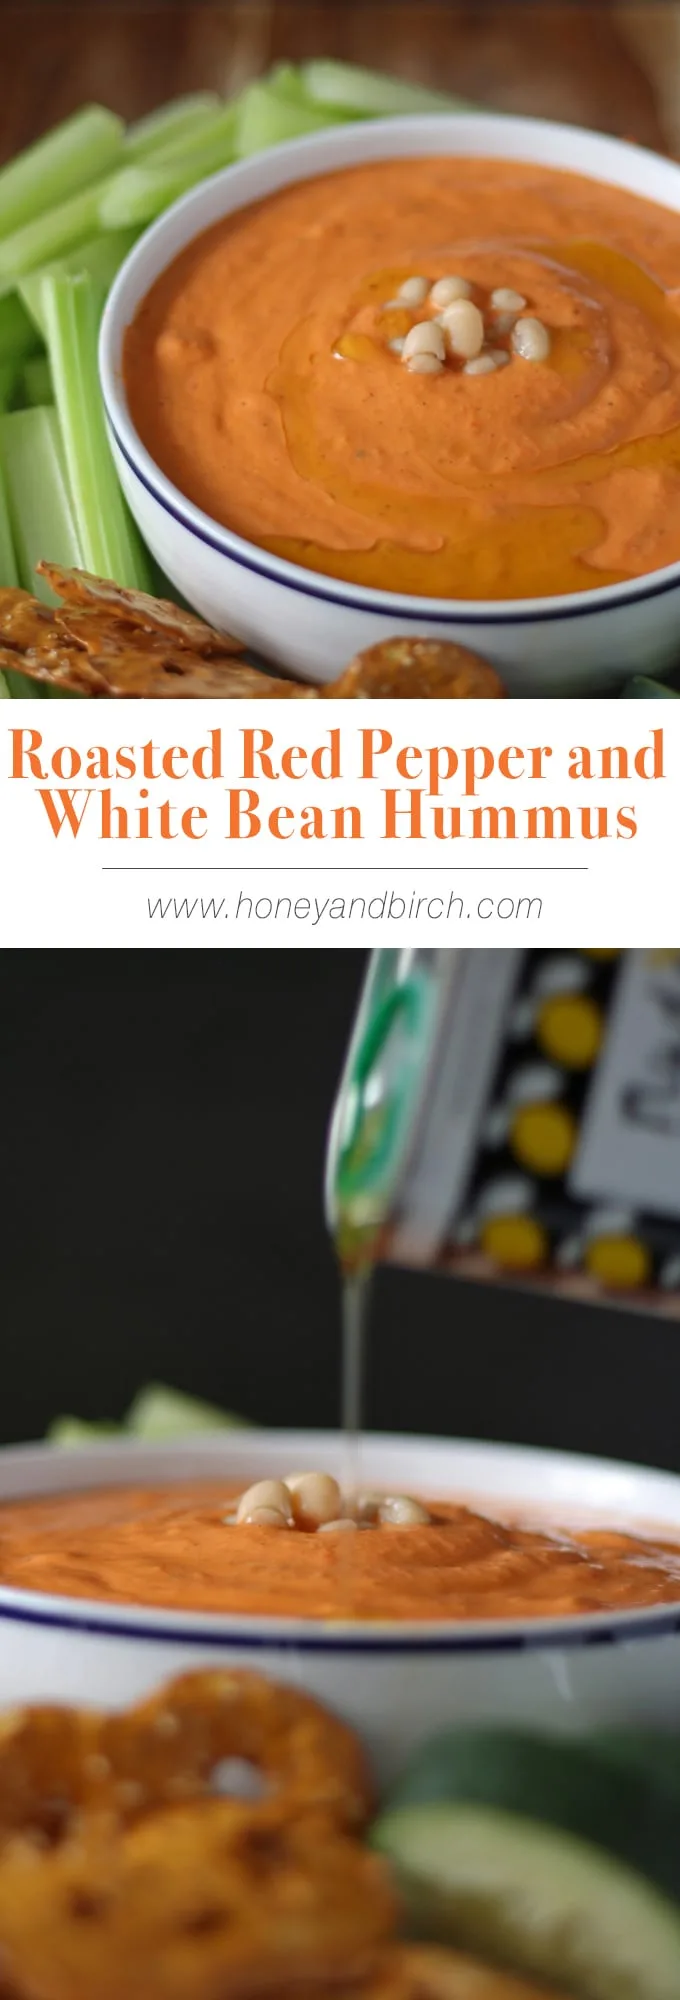 Roasted Red Pepper and White Bean Hummus | www.honeyandbirch.com | #dip